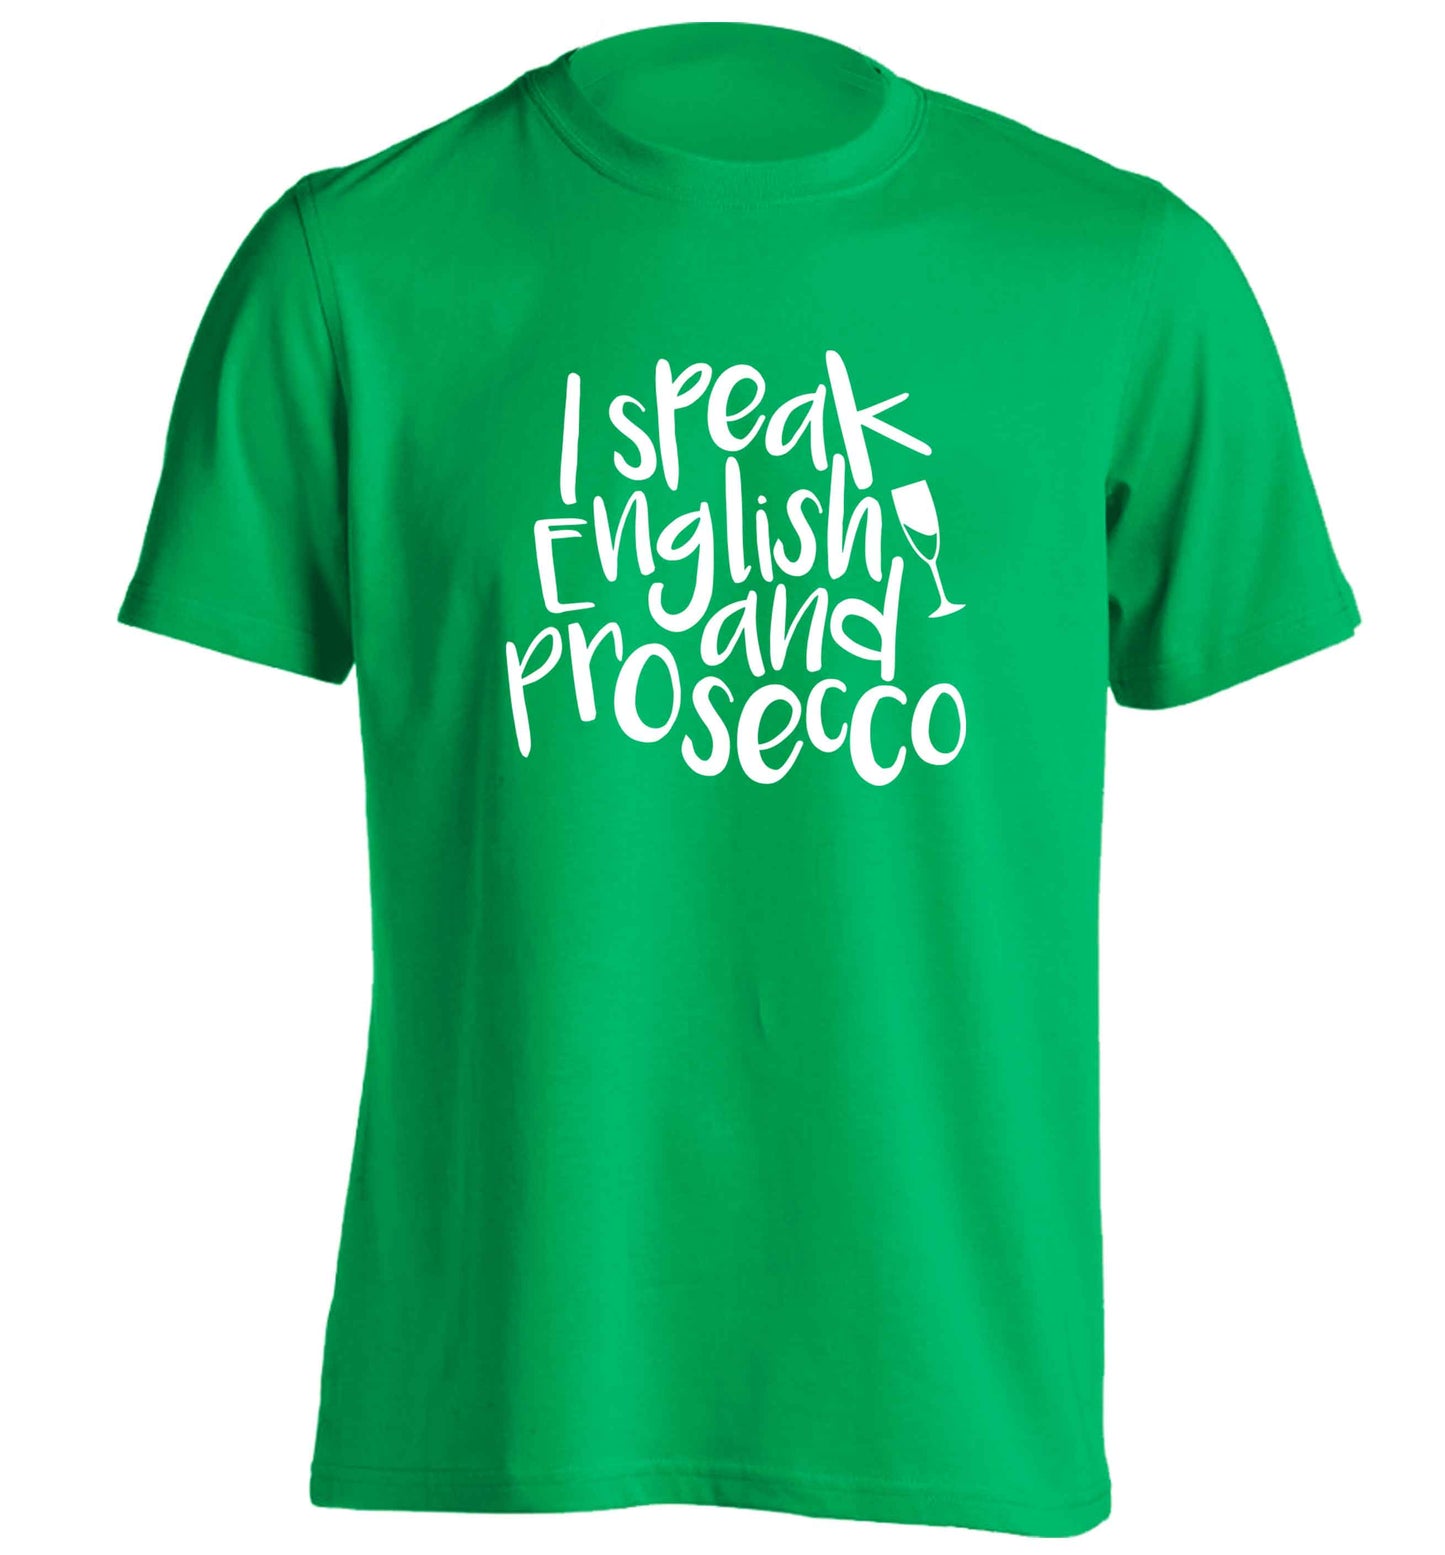 I speak English and prosecco adults unisex green Tshirt 2XL